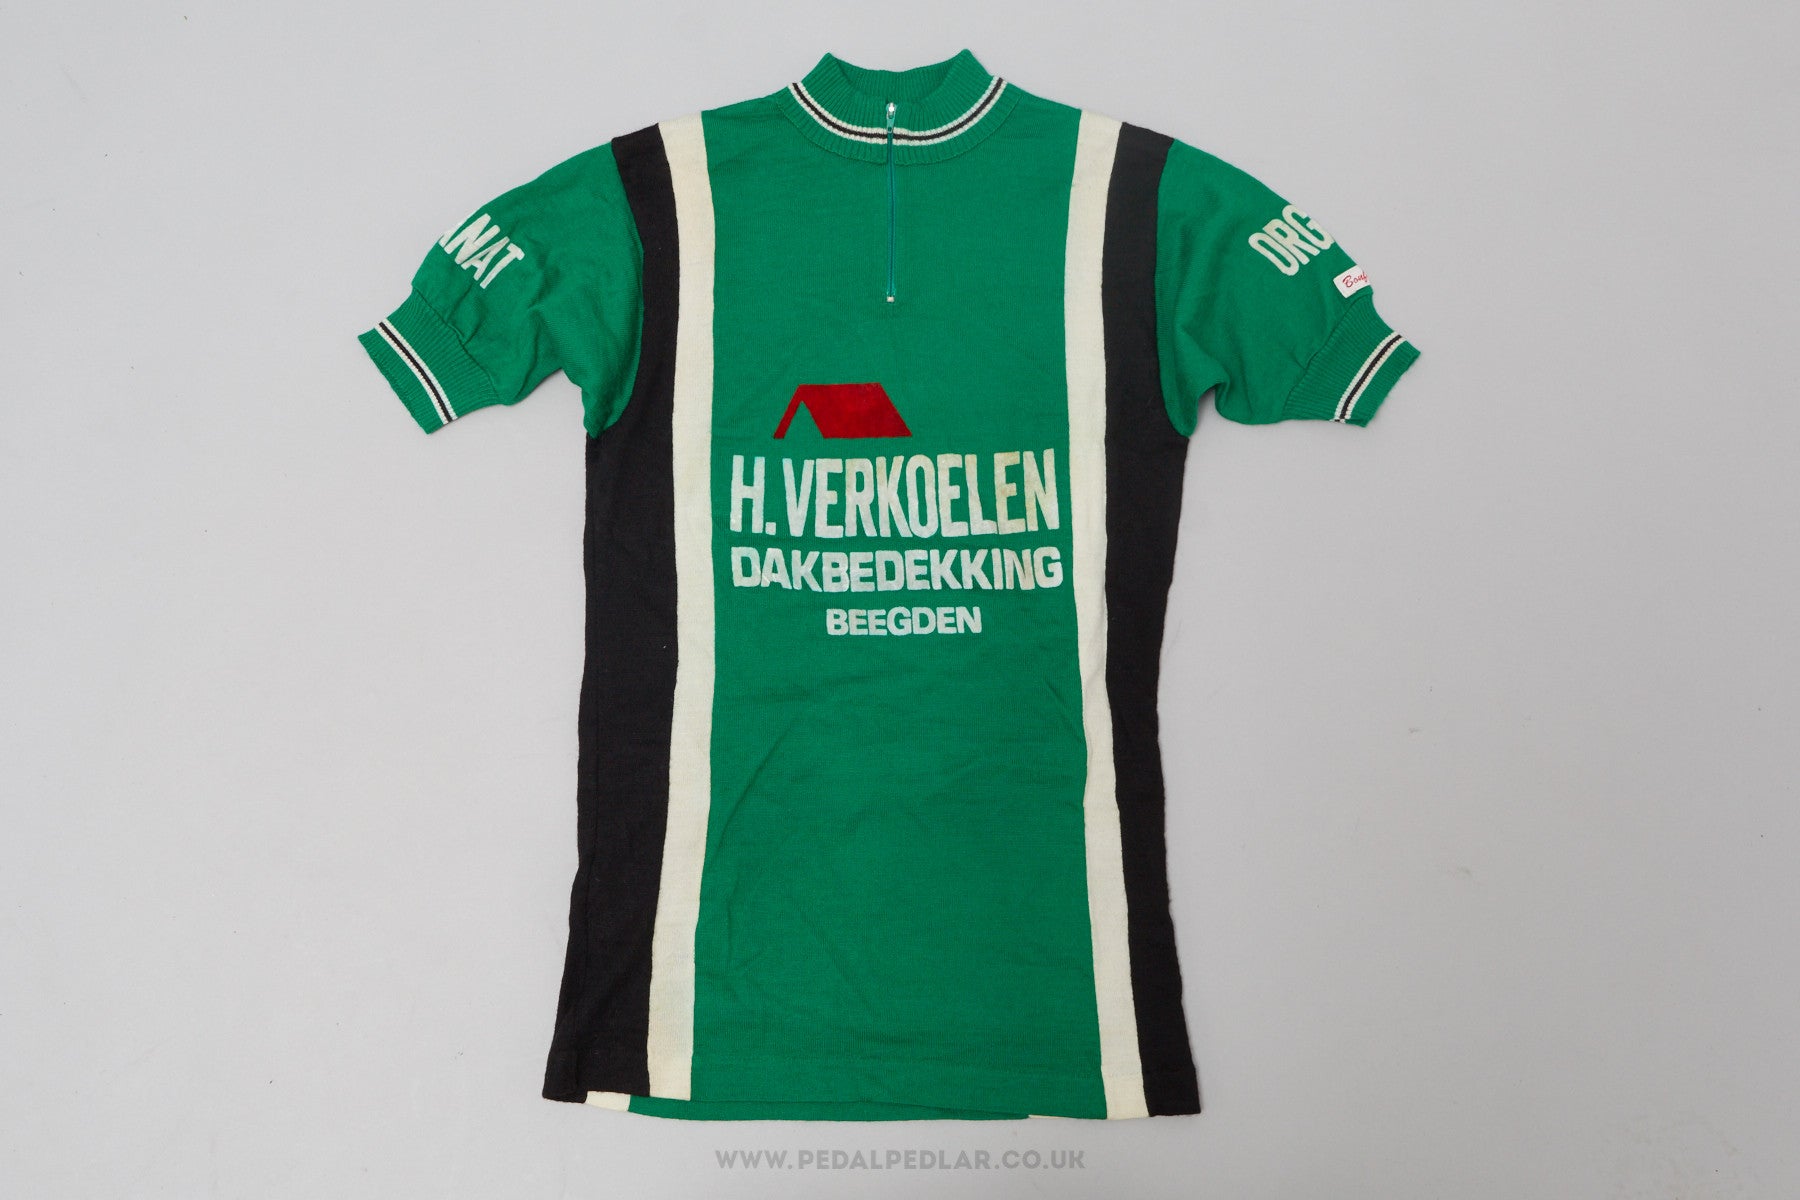 H. Verkoelen Dakbedekking Beegden	- Vintage	Woollen Style	Cycling Jersey - Pedal Pedlar
 - 1